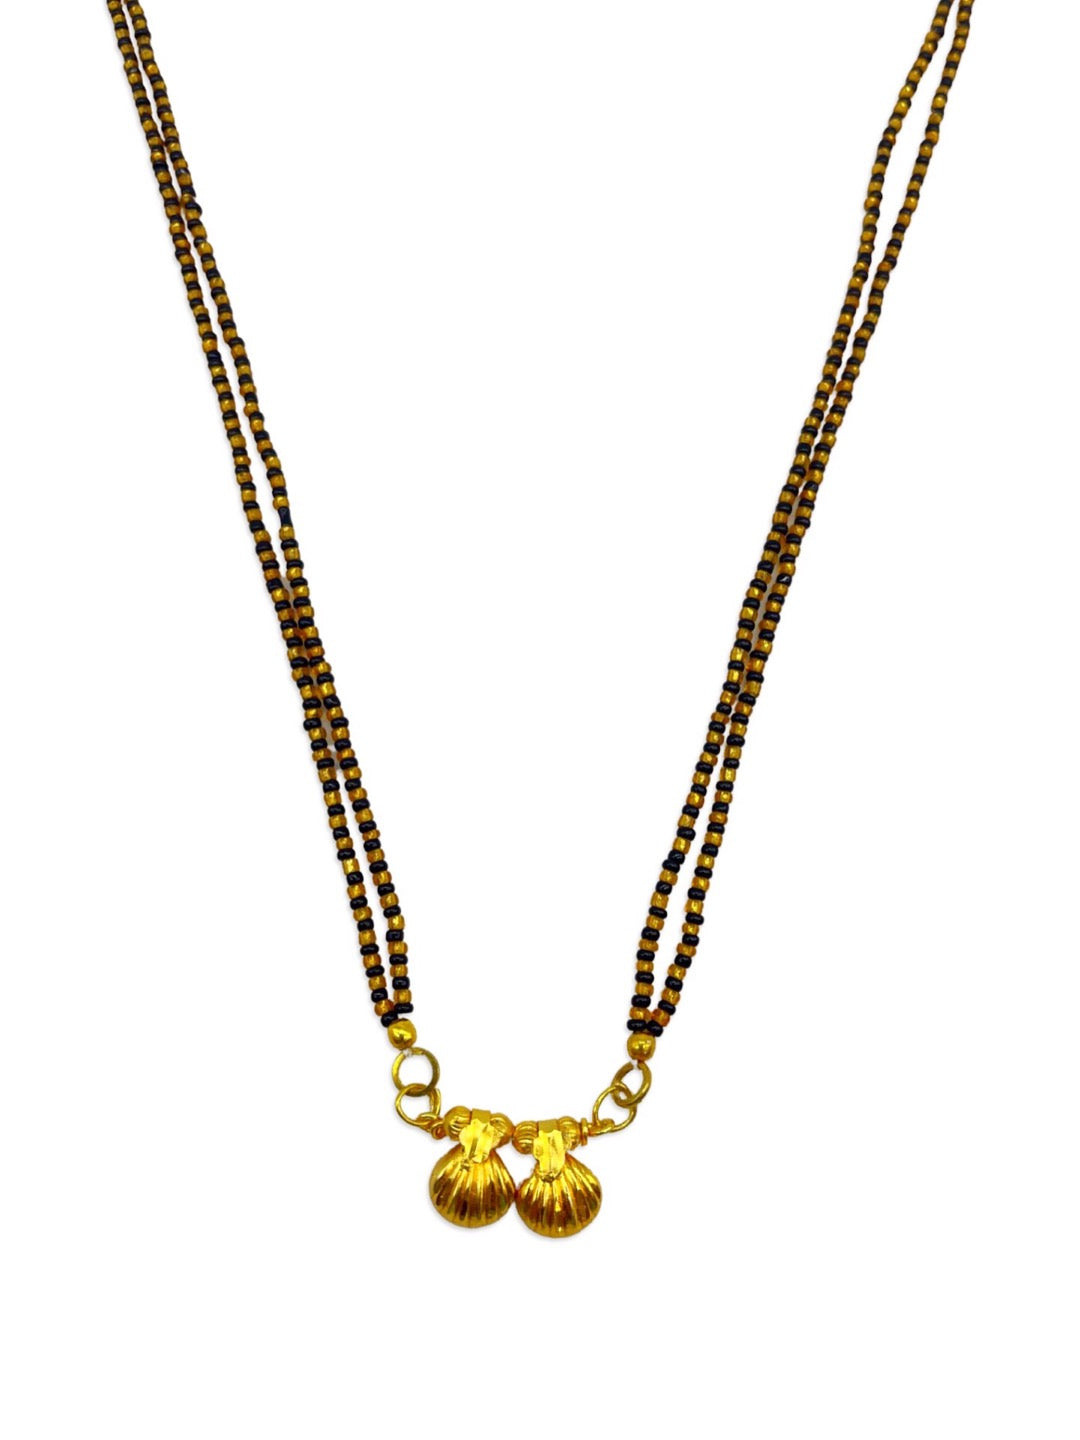 Short Mangalsutra Designs Gold Plated Latest 2 Vati Pendant Black Beads Mangalsutra